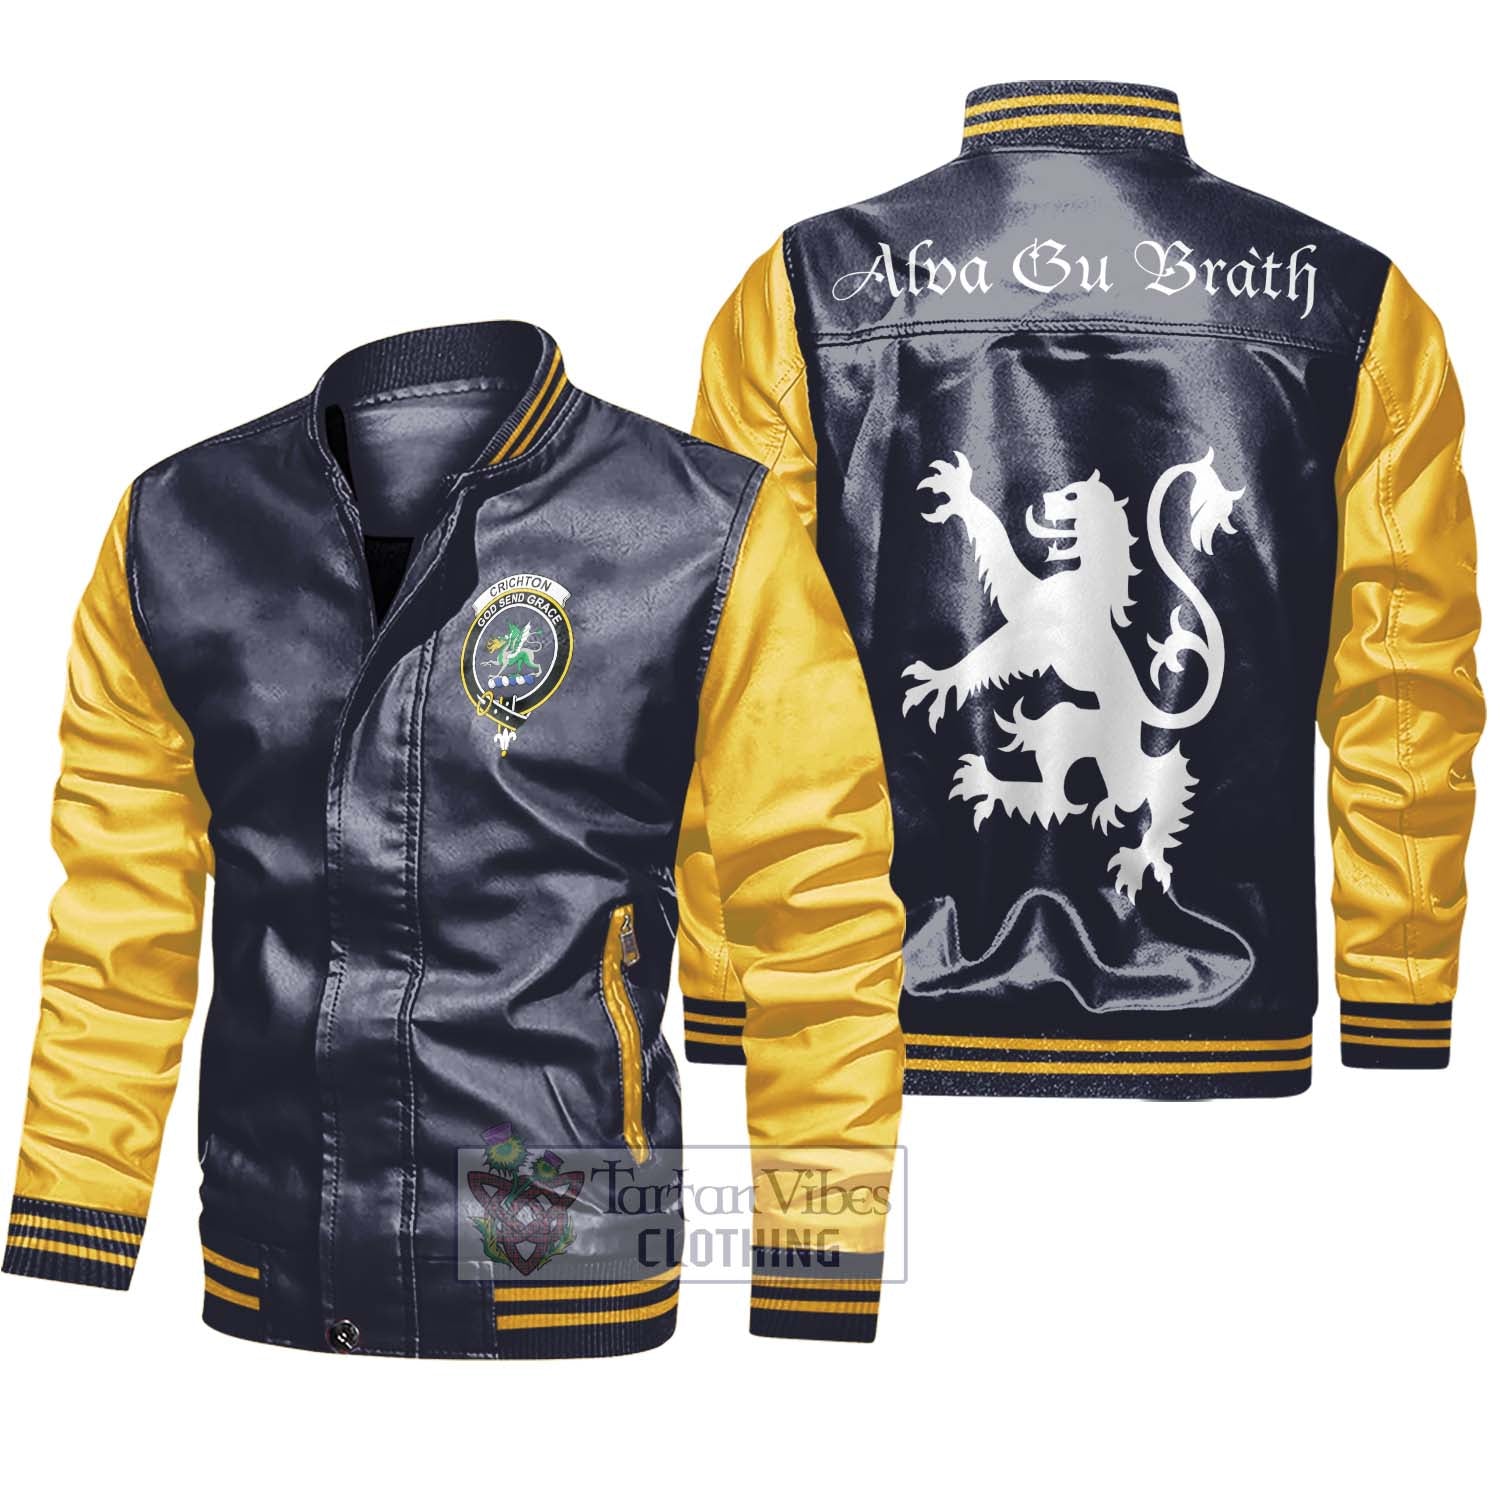 Tartan Vibes Clothing Crichton Family Crest Leather Bomber Jacket Lion Rampant Alba Gu Brath Style